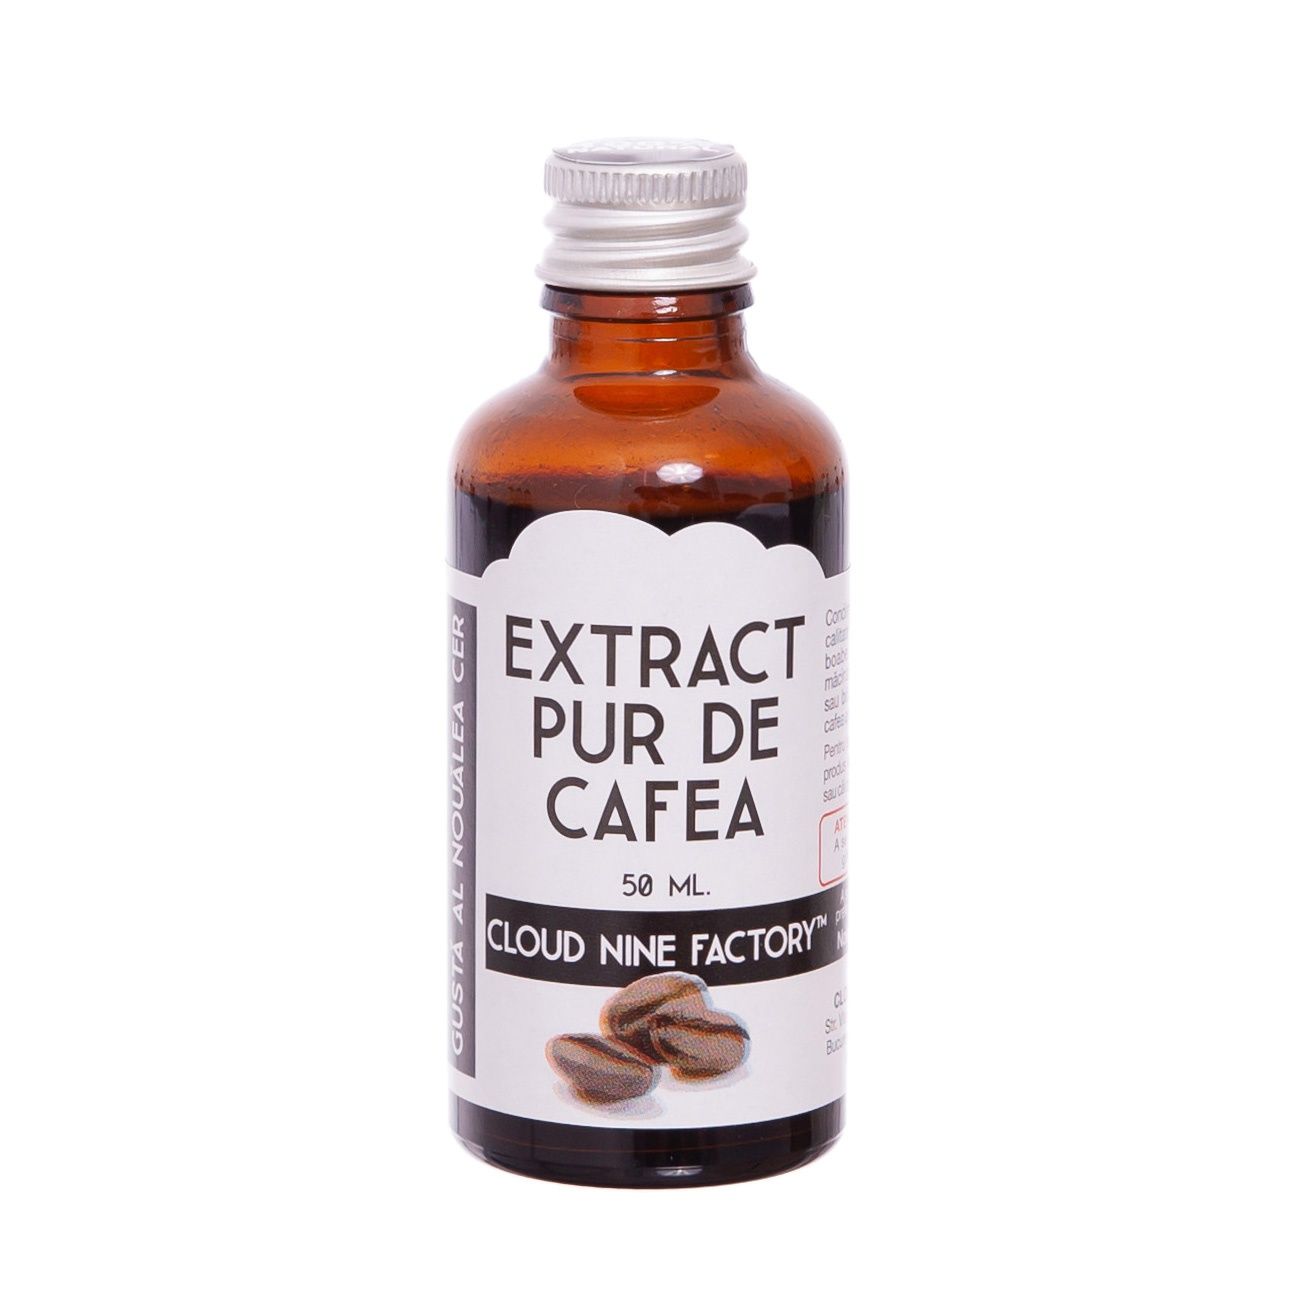 Extract Pur de Cafea (50 ml.) extract pur de cafea (50 ml.) x 10 buc. - IMG 2612 - Extract Pur de Cafea (50 ml.) x 10 buc. magazin online - IMG 2612 - Cloud Nine Factory™ ⛅ Magazin online